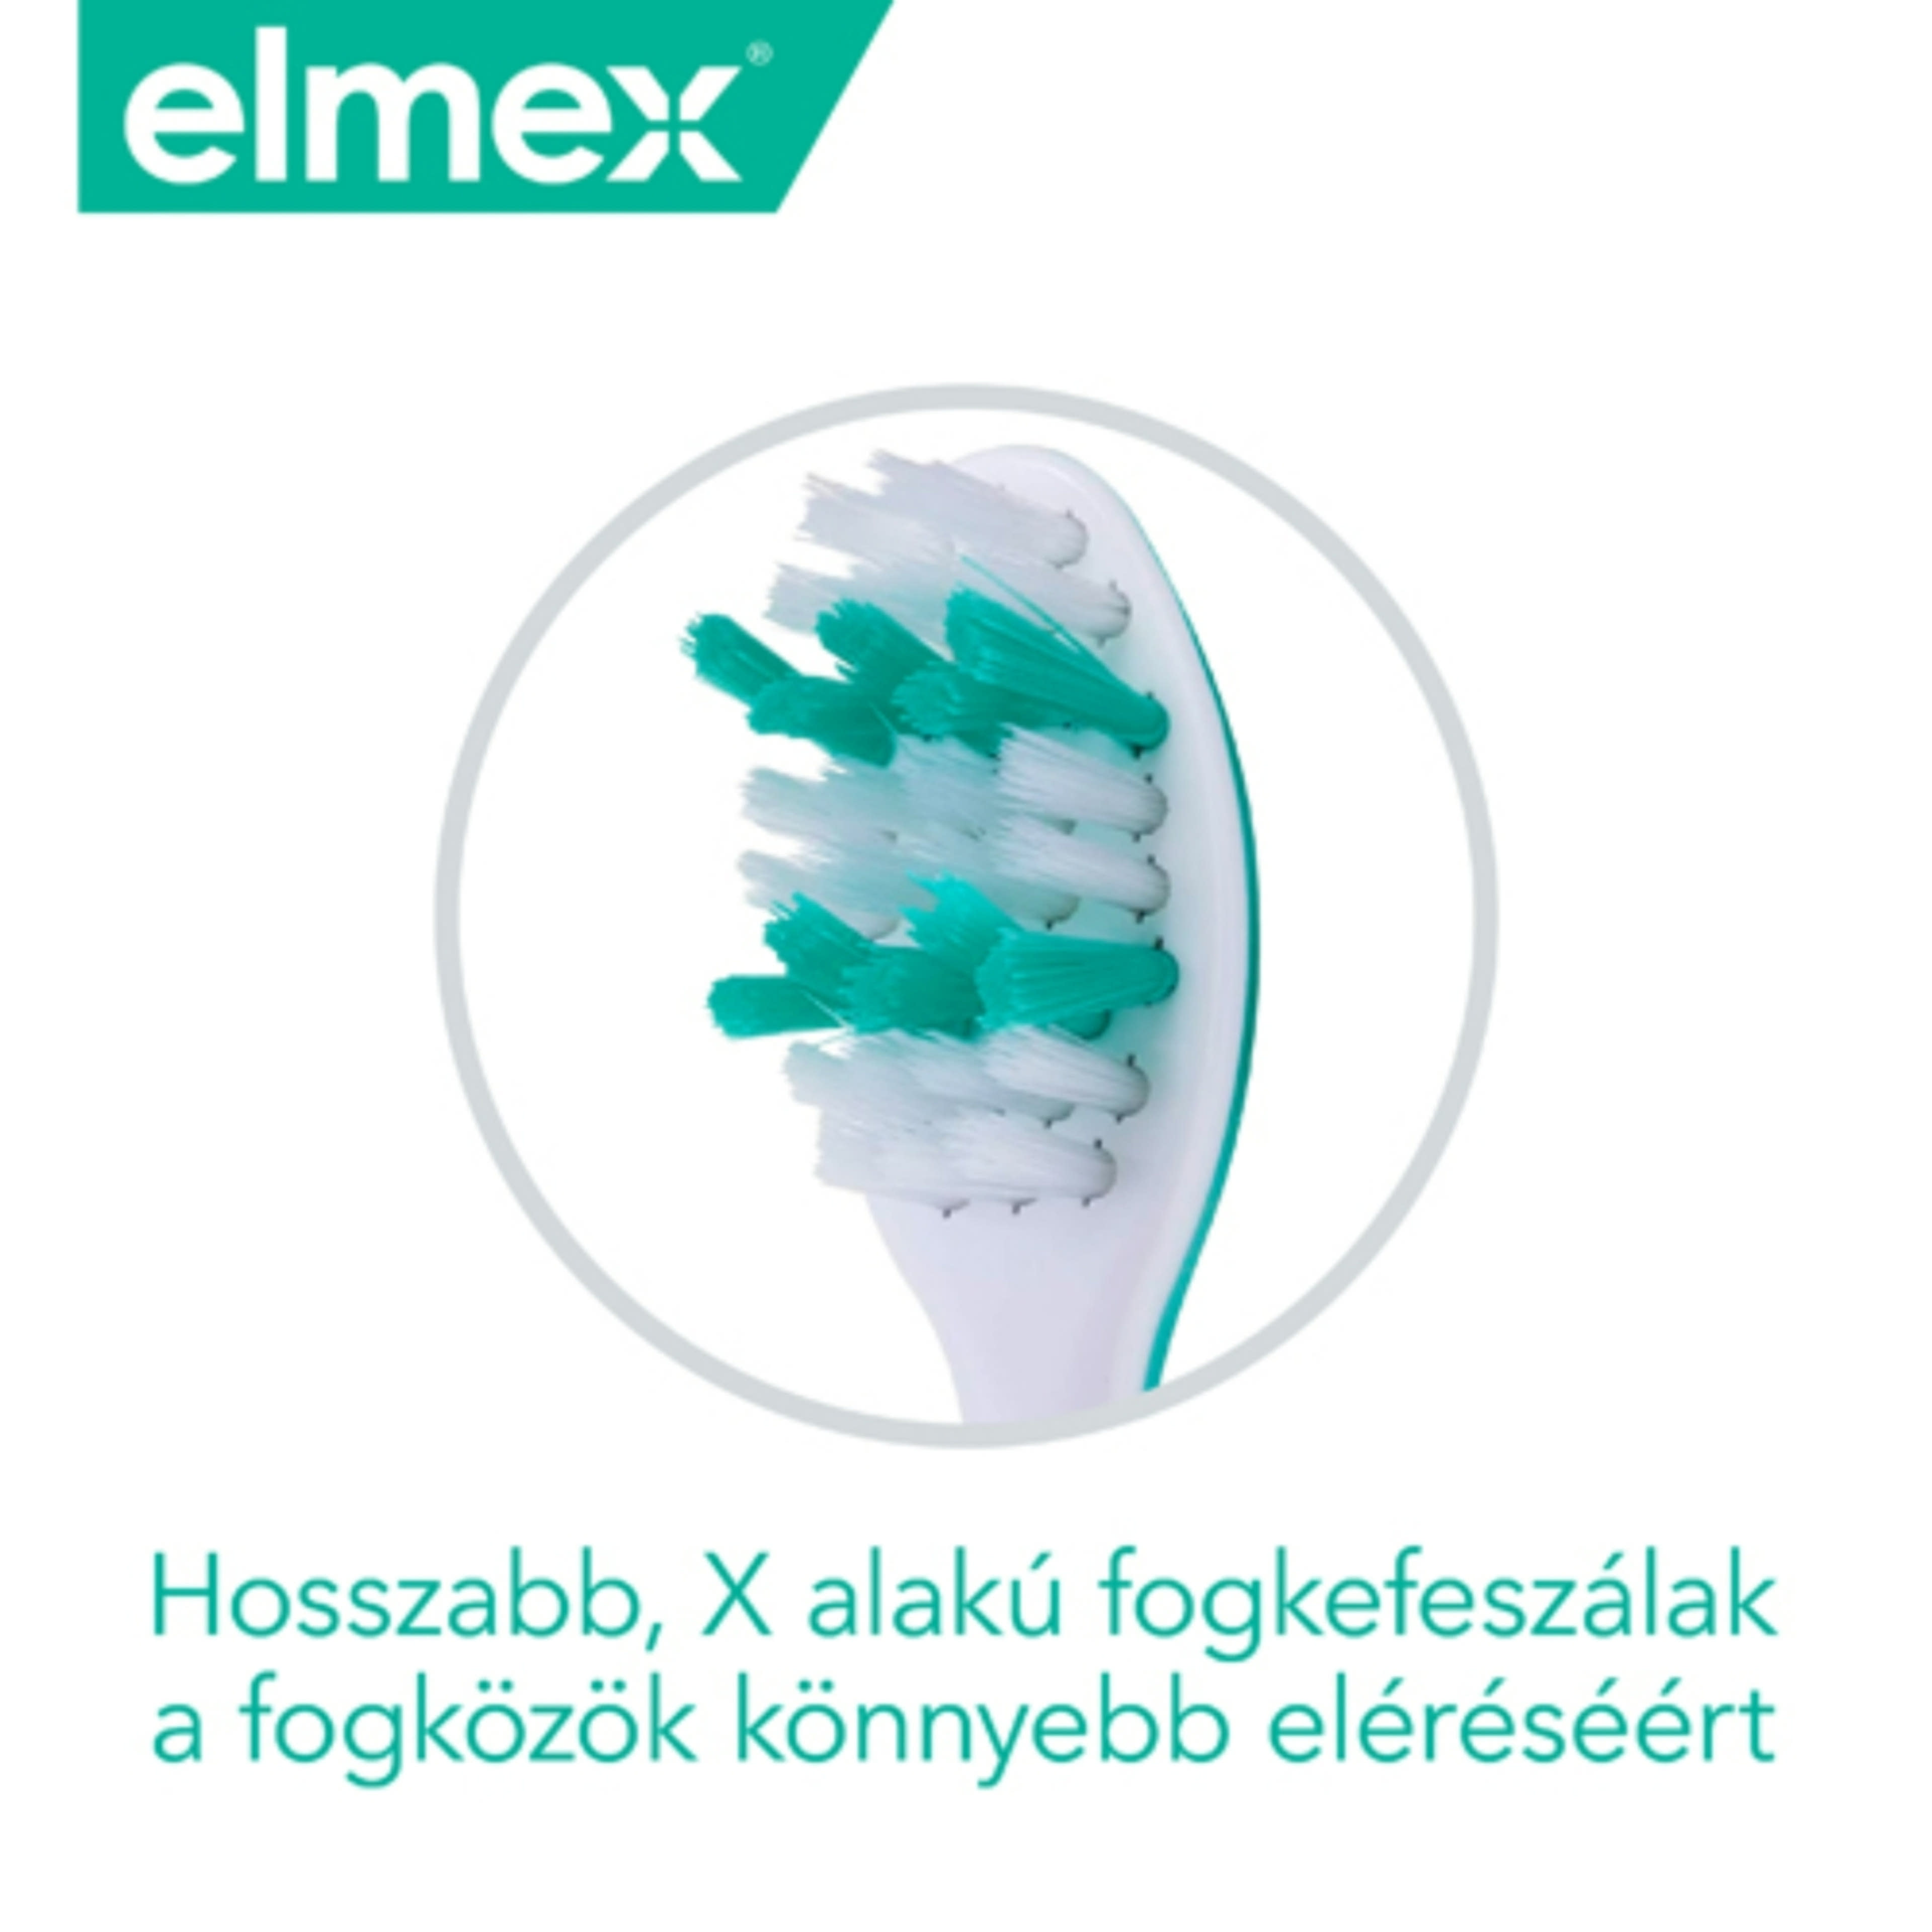 Elmex Sensitive puha fogkefe - 1 db-5